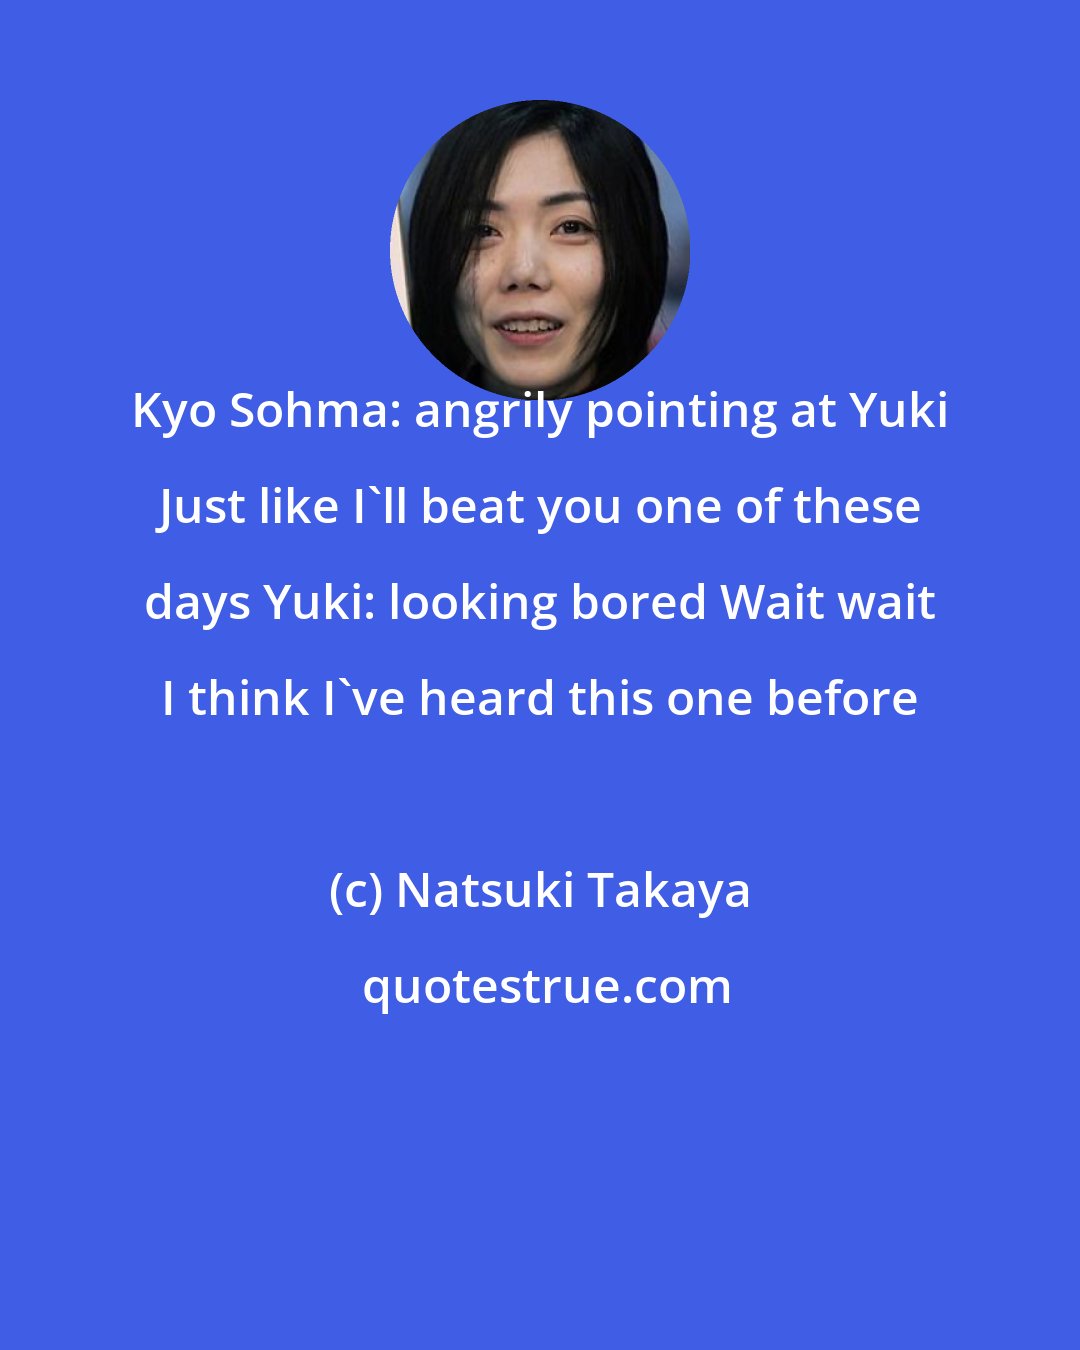 Natsuki Takaya: Kyo Sohma: angrily pointing at Yuki Just like I'll beat you one of these days Yuki: looking bored Wait wait I think I've heard this one before